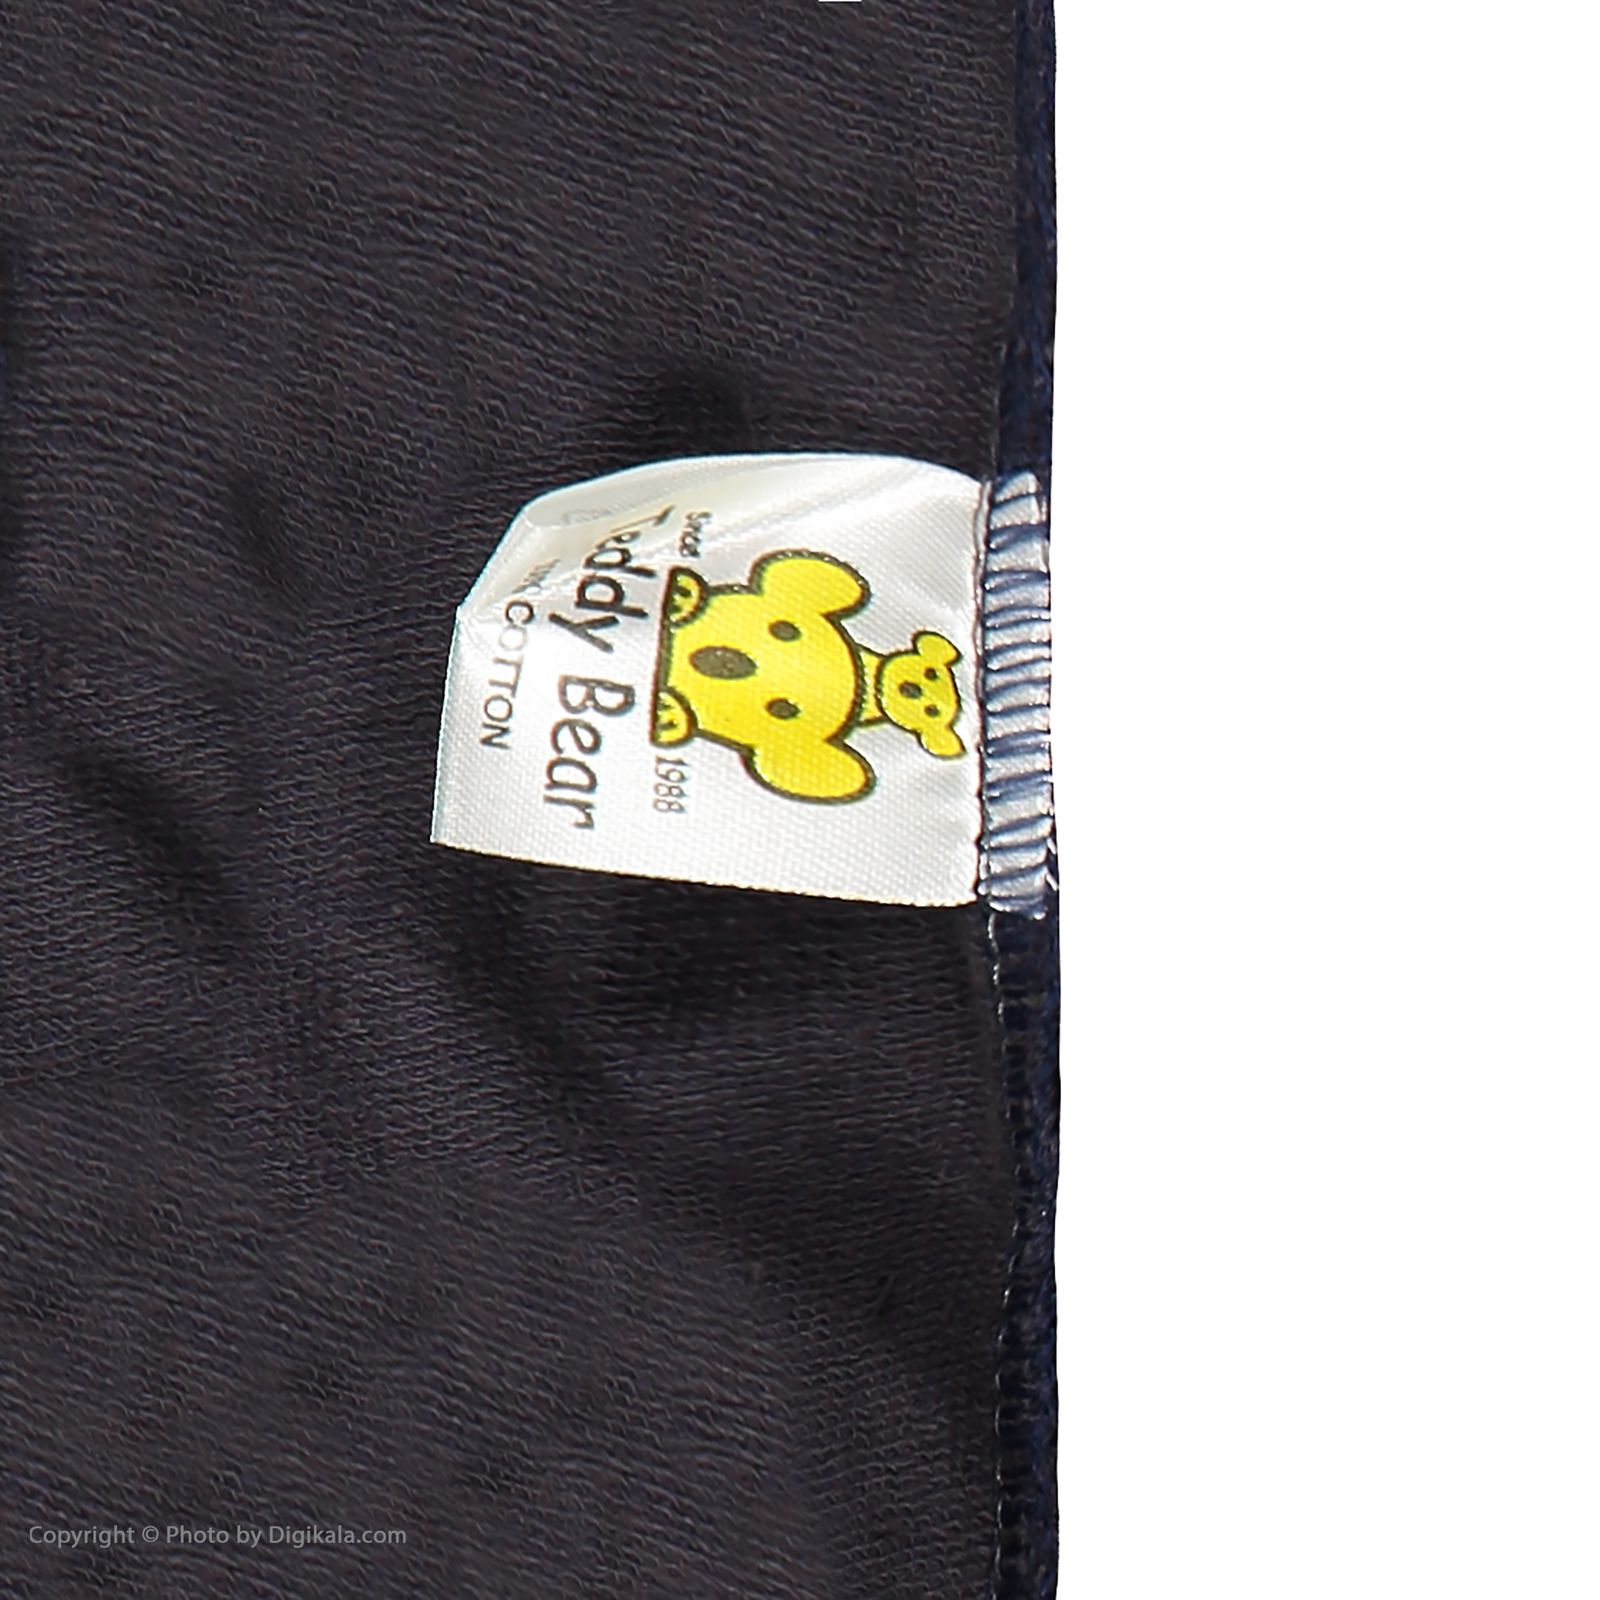 ست سویشرت و شلوار پسرانه خرس کوچولو مدل 2011230-93 -  - 9